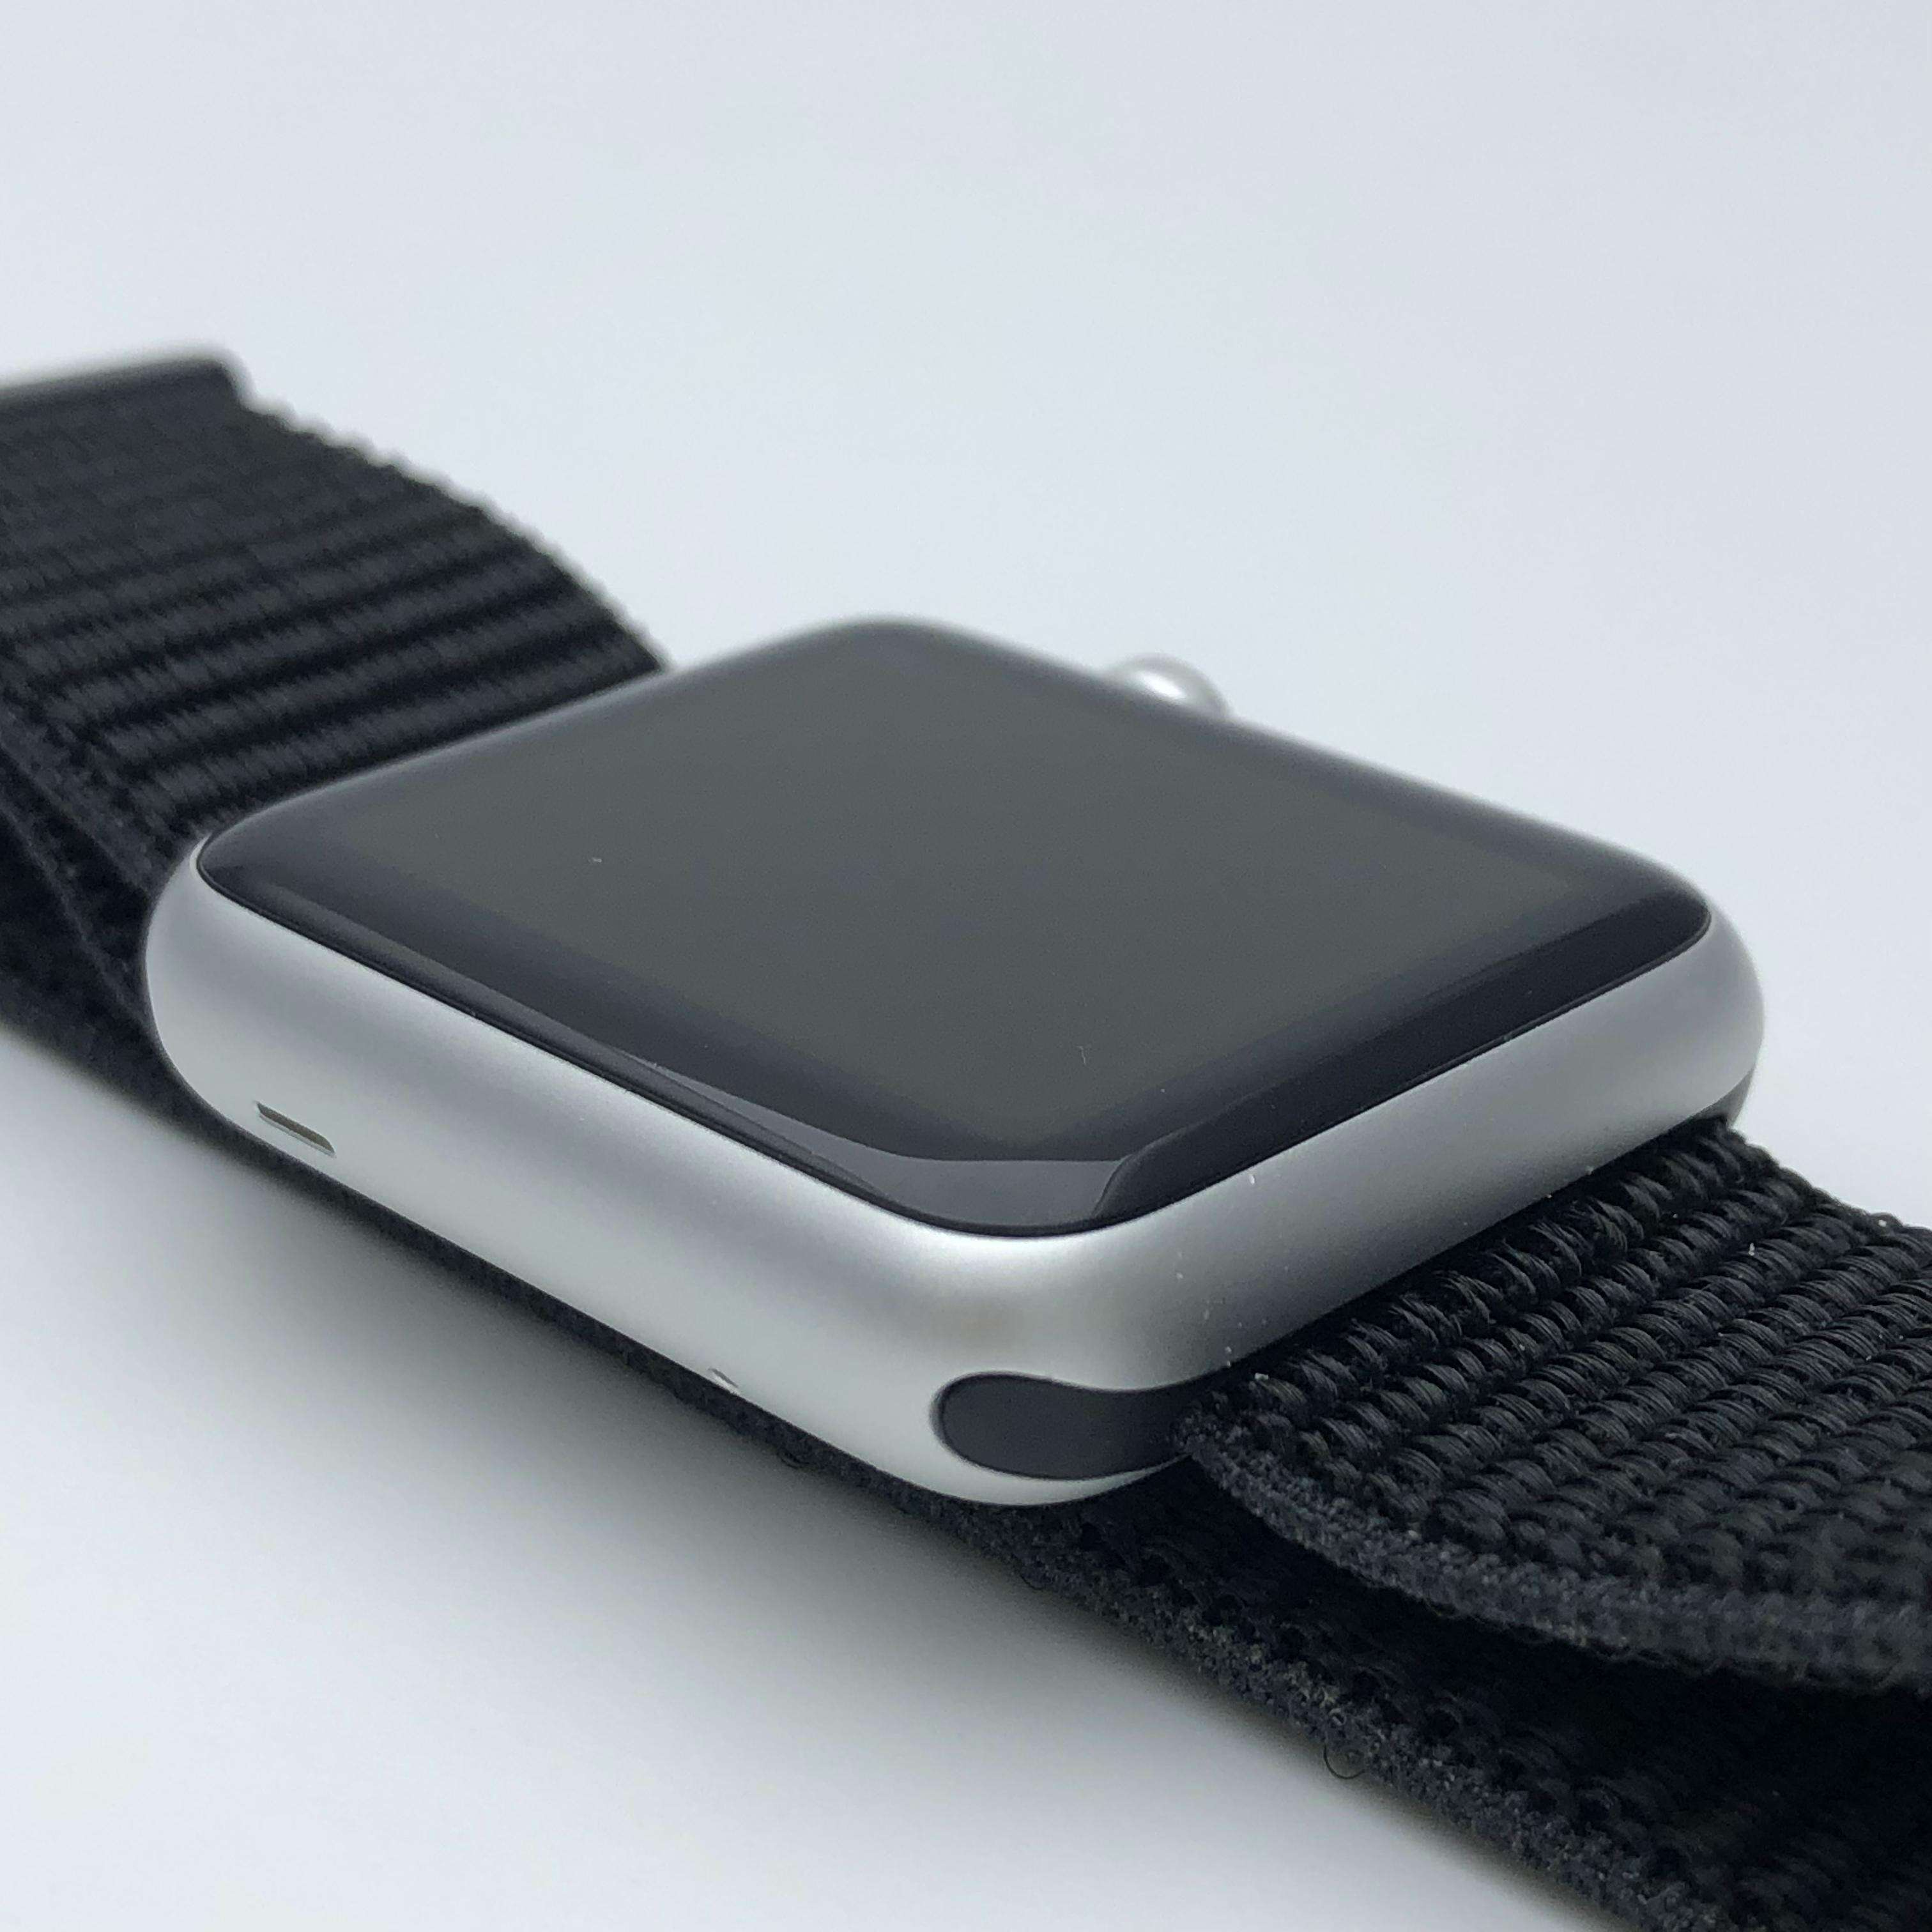 Apple Watch 初代铝金属表壳 42MM 国行GPS版